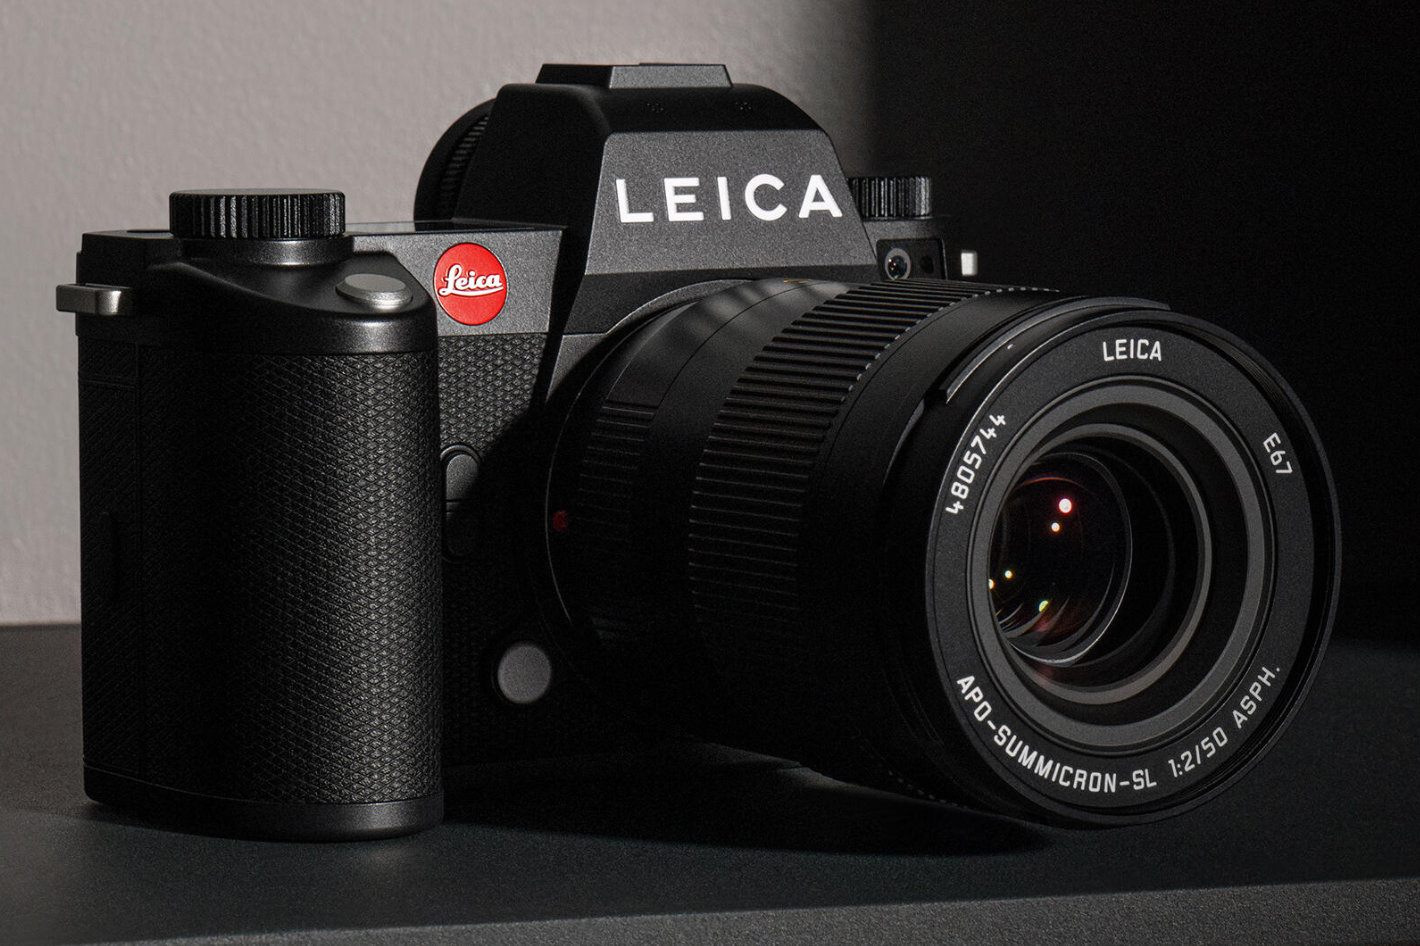 The new Leica SL3 has three AF technologies